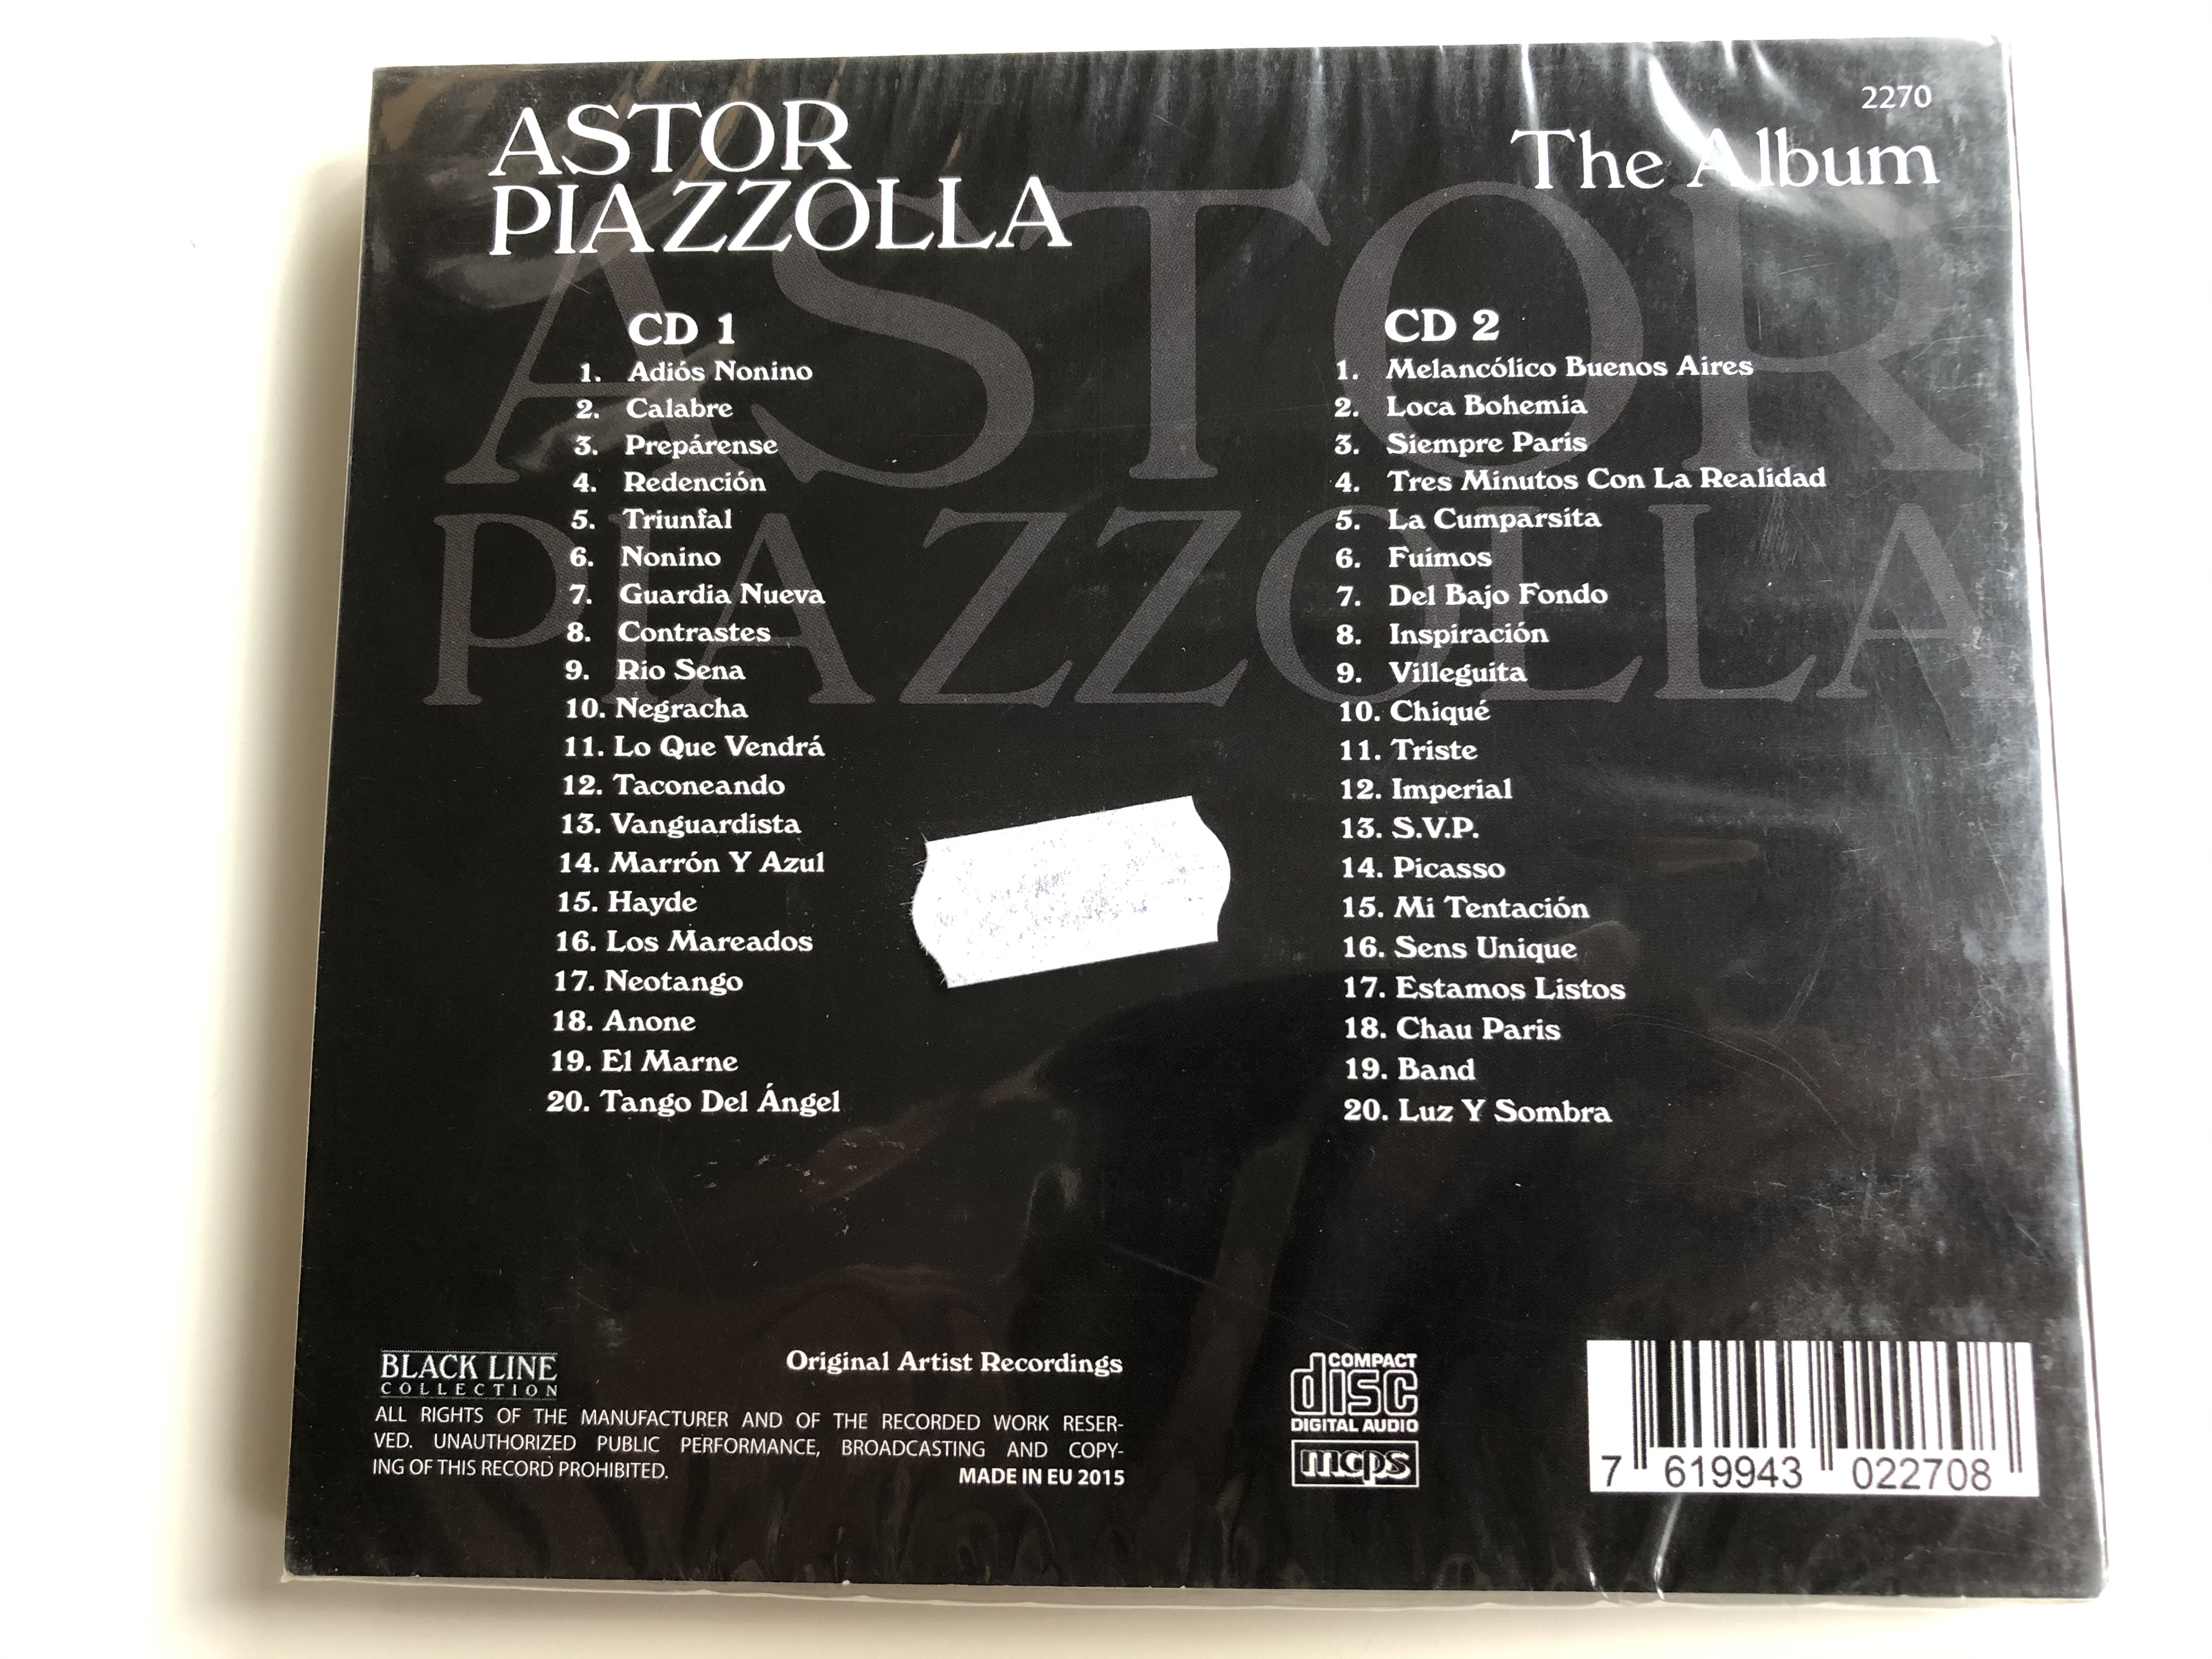 astor-piazzolla-the-album-topmaster-ltd.-2x-audio-cd-2270-2-.jpg